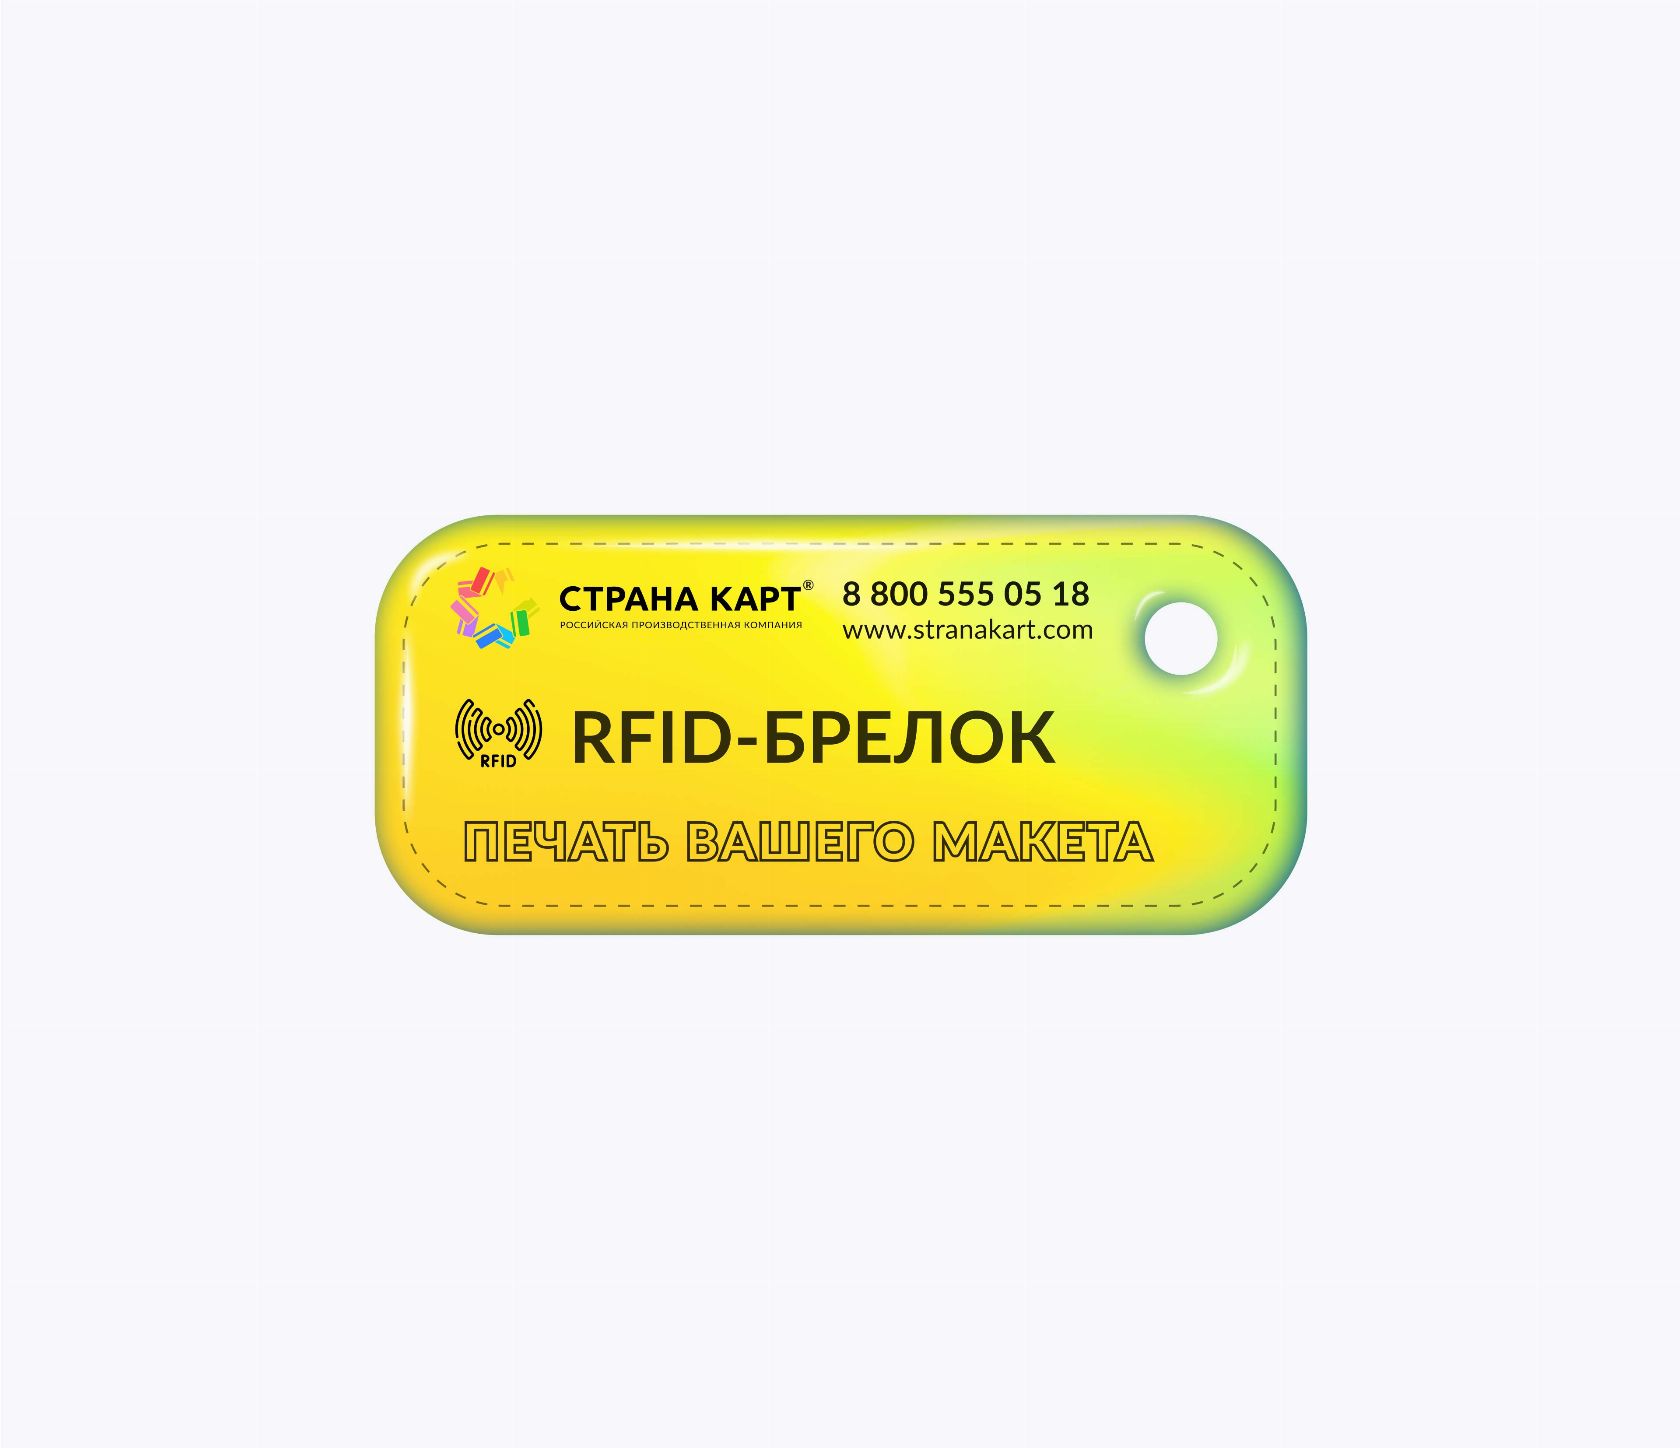 Прямоугольные мини RFID-брелоки NEOKEY® с чипом T5557, T5577 Temic RFID-брелоки NEOKEY® с чипом T5557, T5577 Temic и вашим логотипом